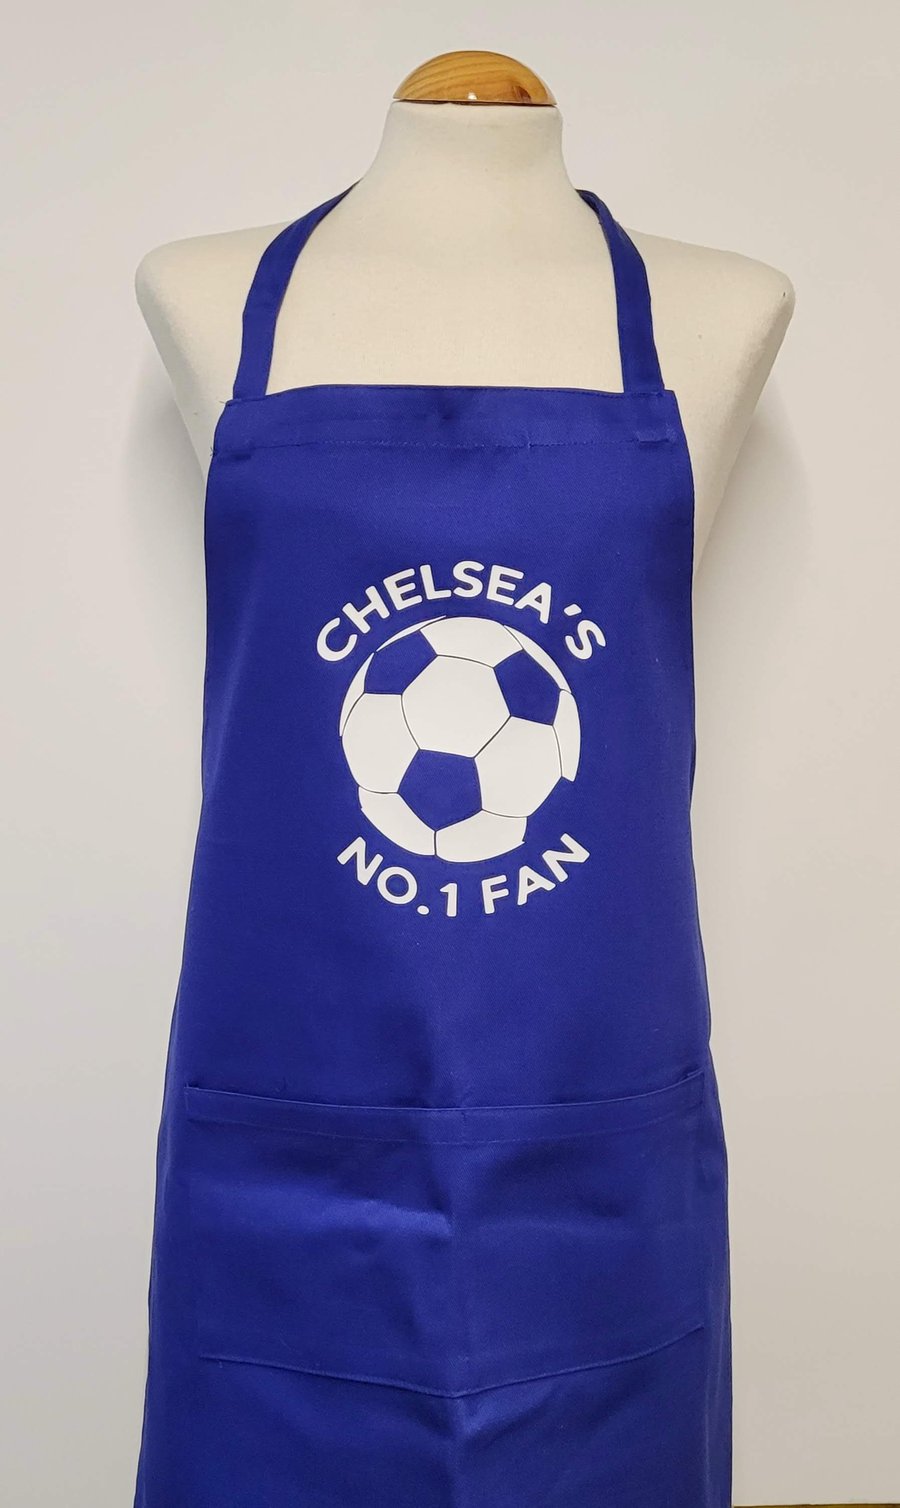 Chelsea - No.1 fan. Medium cotton apron with pocket 